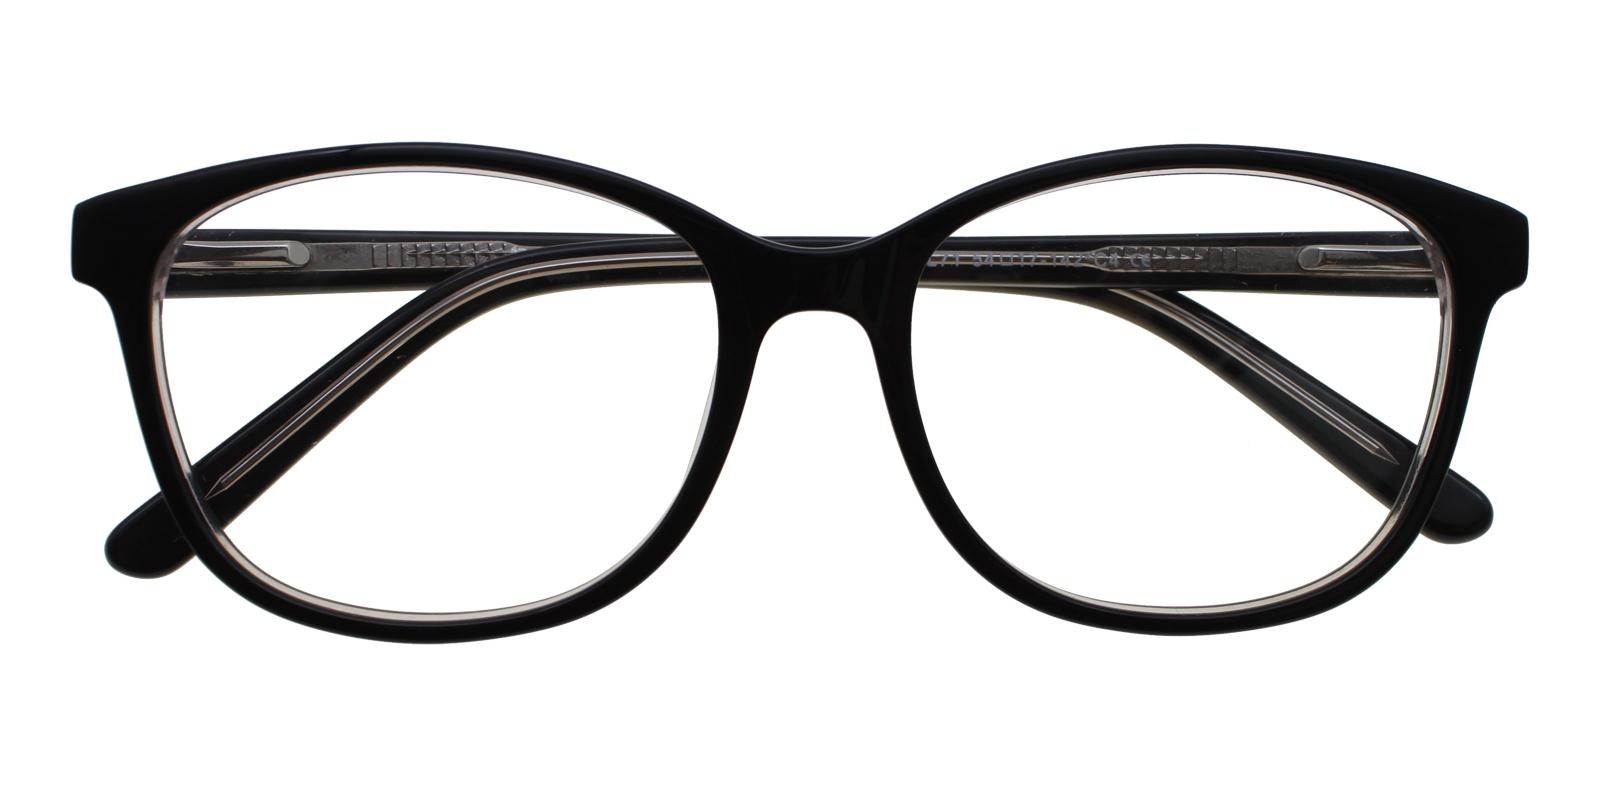 Bolivia Black Acetate Eyeglasses , SpringHinges , UniversalBridgeFit Frames from ABBE Glasses